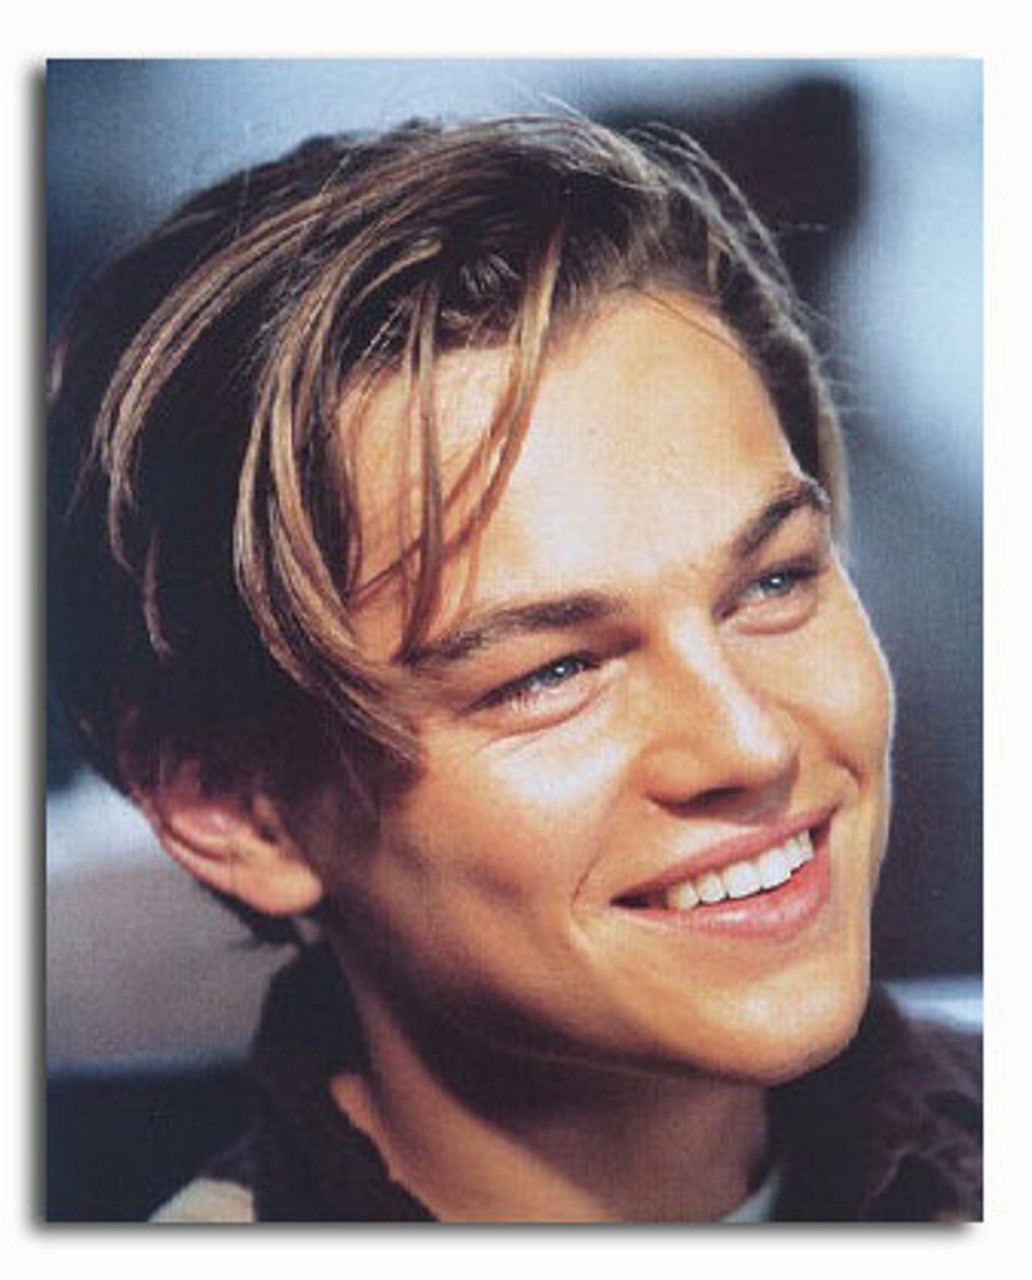 ss3012672 Movie Picture Of Leonardo Dicaprio Buy Celebrity Photos And Posters At Starstillscom